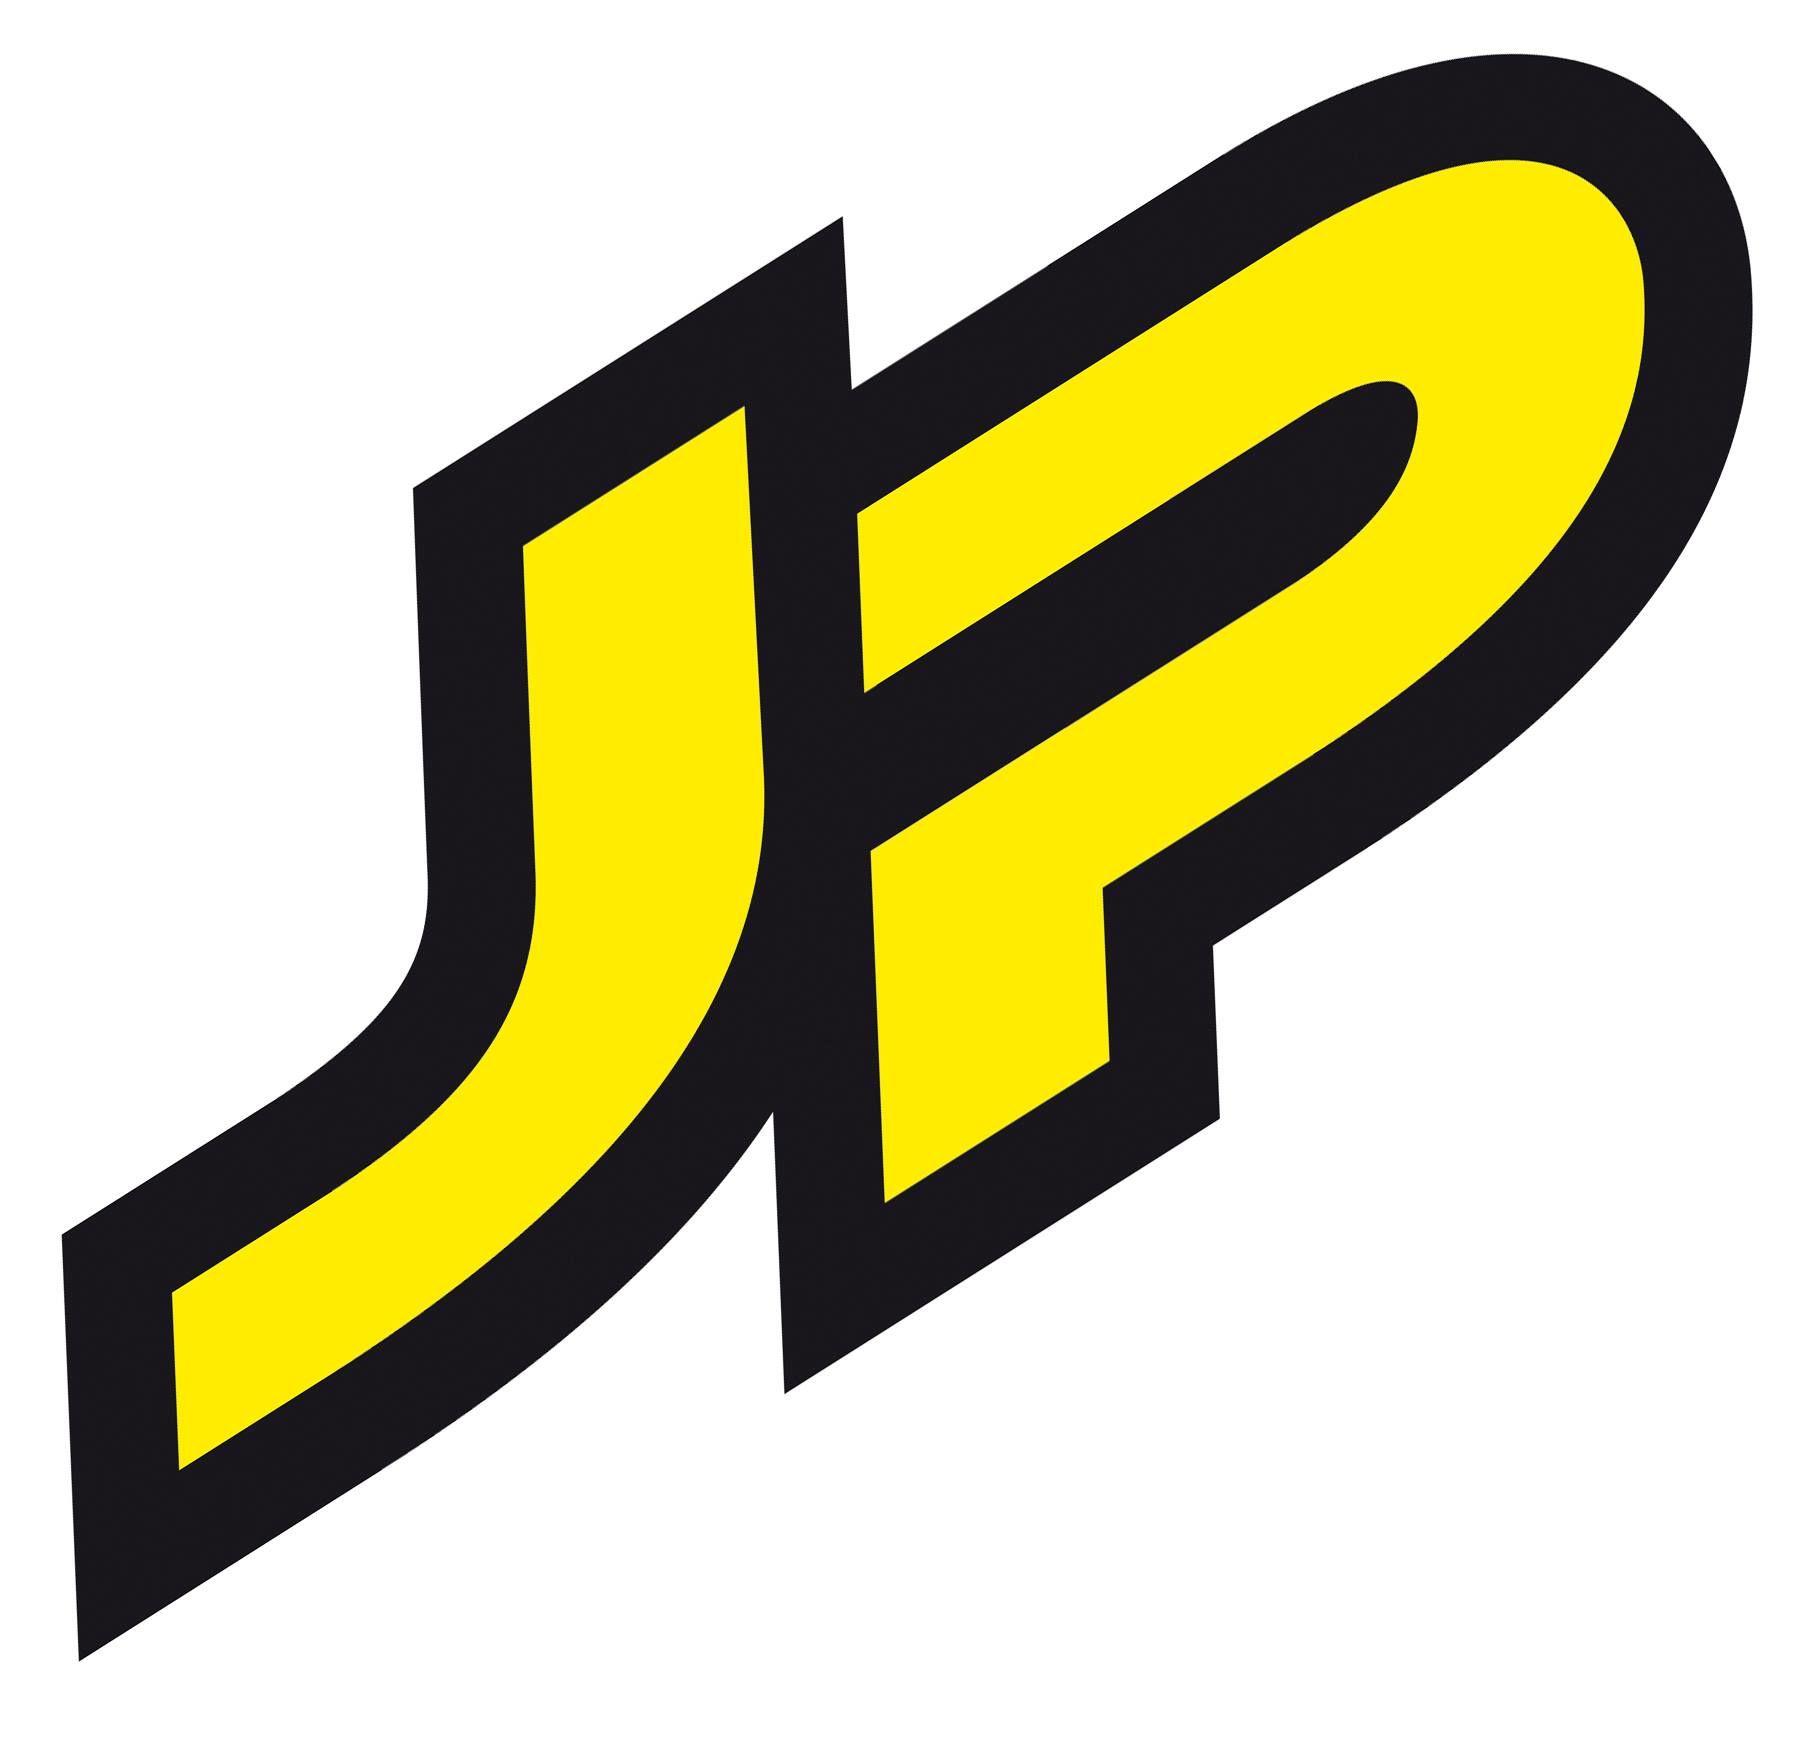 JP Logo - JP 2015 logo | Surf FX